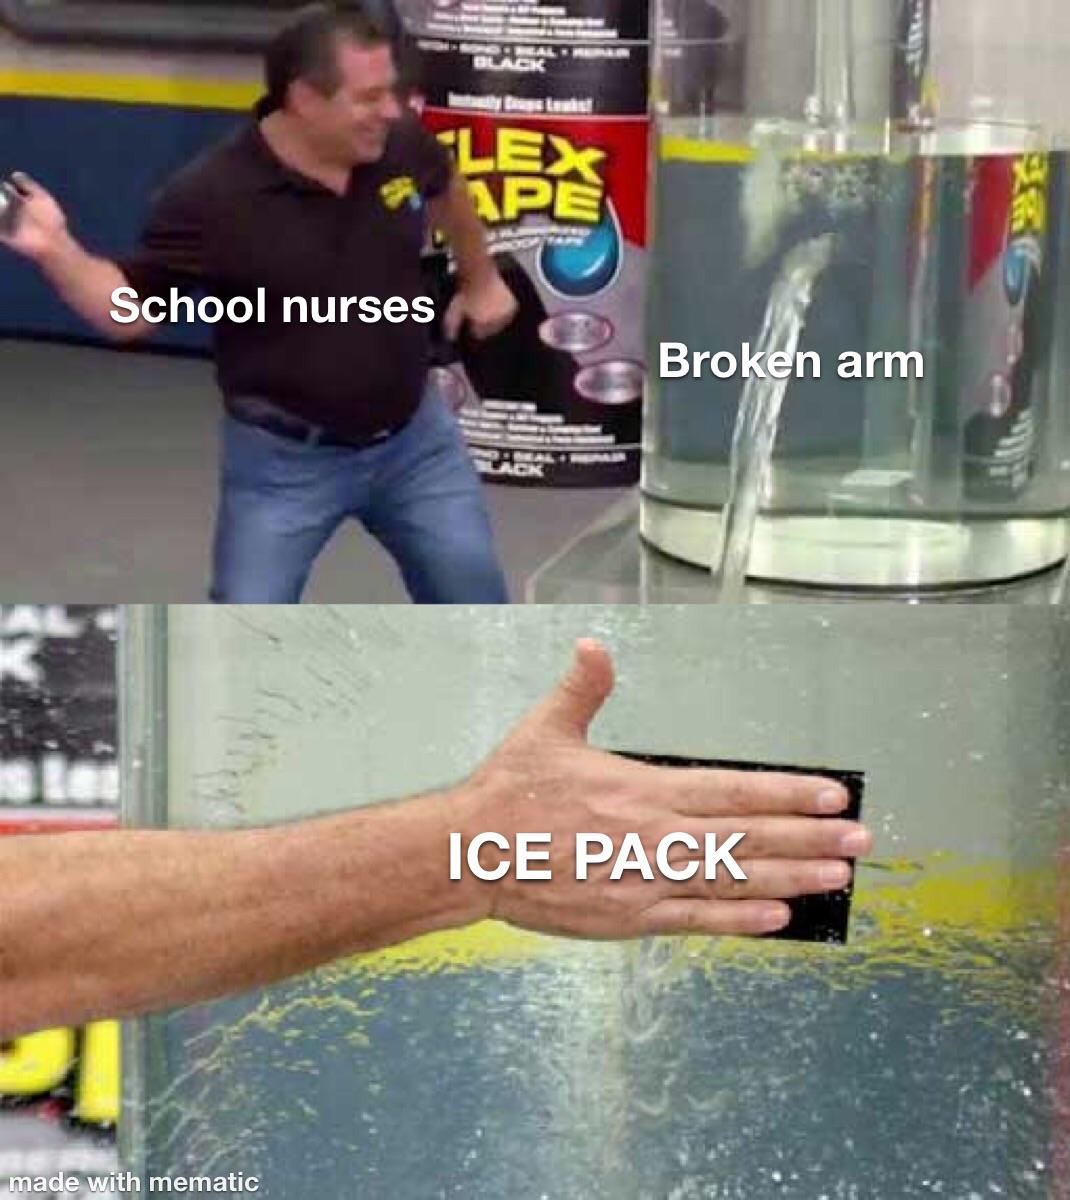 funny memes and random pics - zoom corona meme - "Lex Ape School nurses Broken arm Ice Pack 21 made with mematic